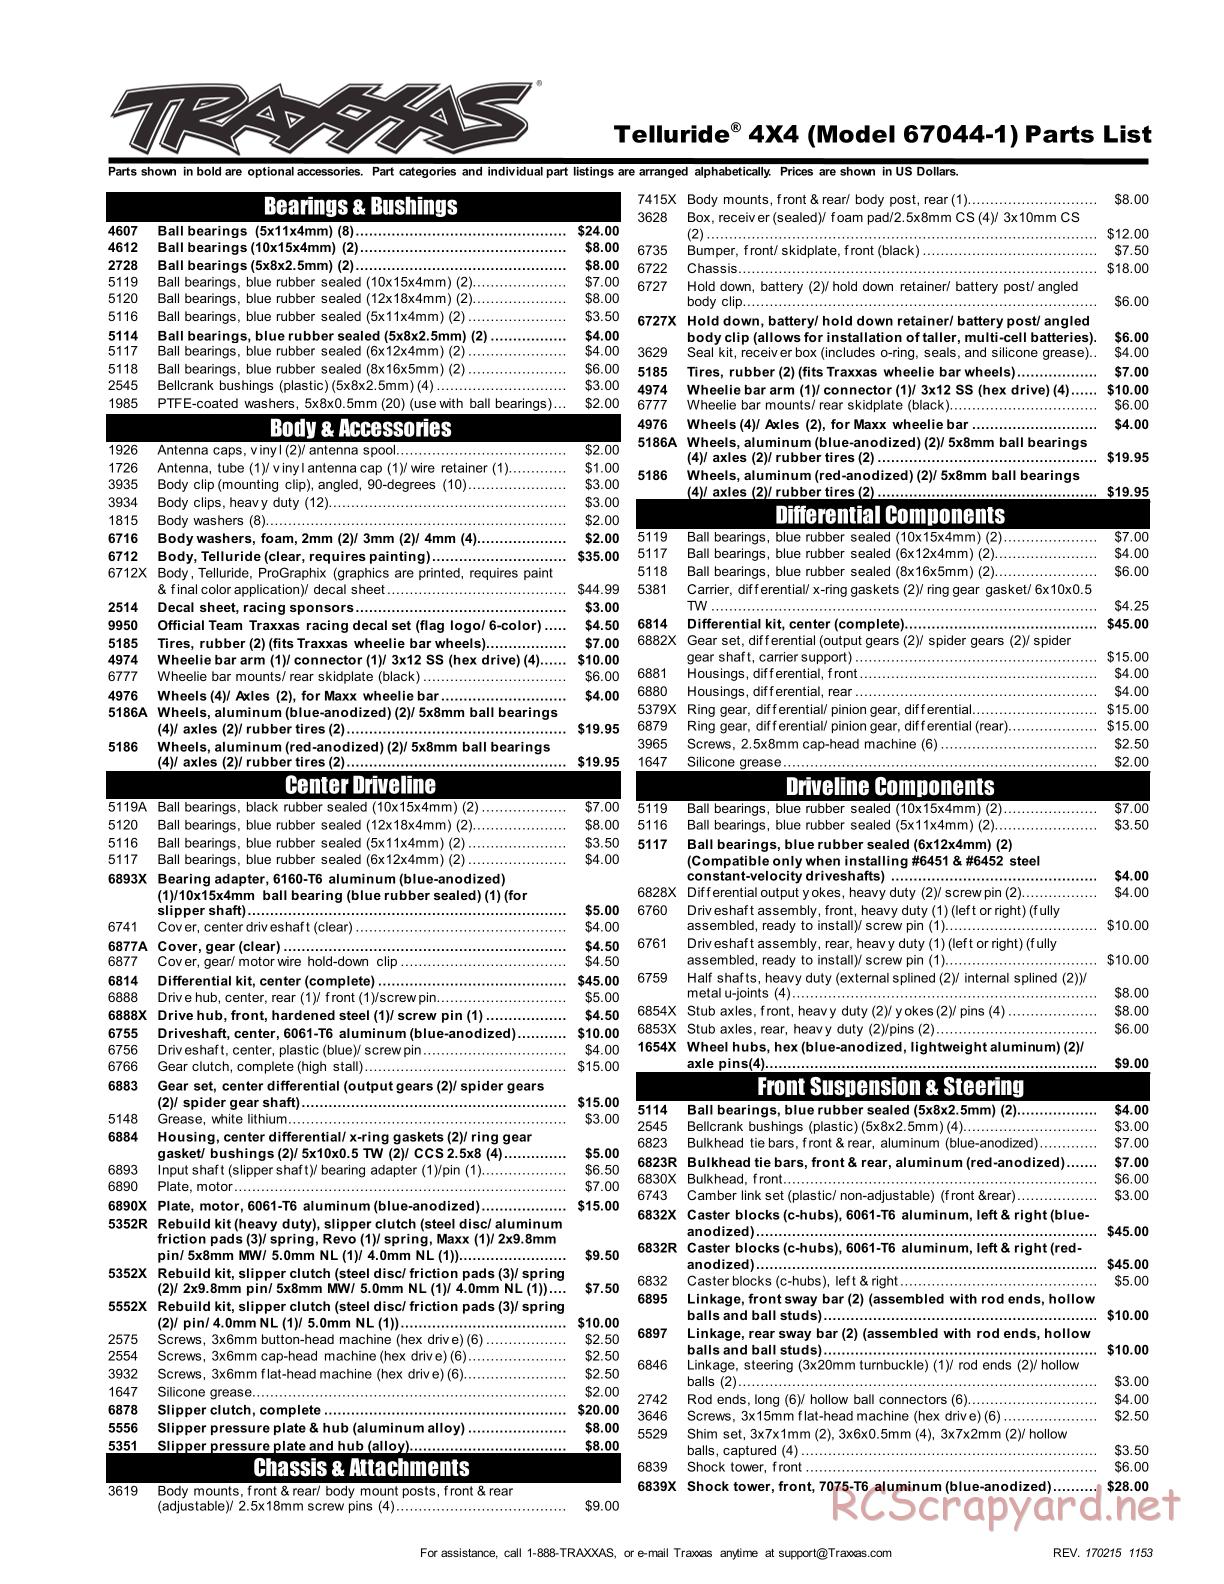 Traxxas - Telluride 4x4 (2015) - Parts List - Page 1